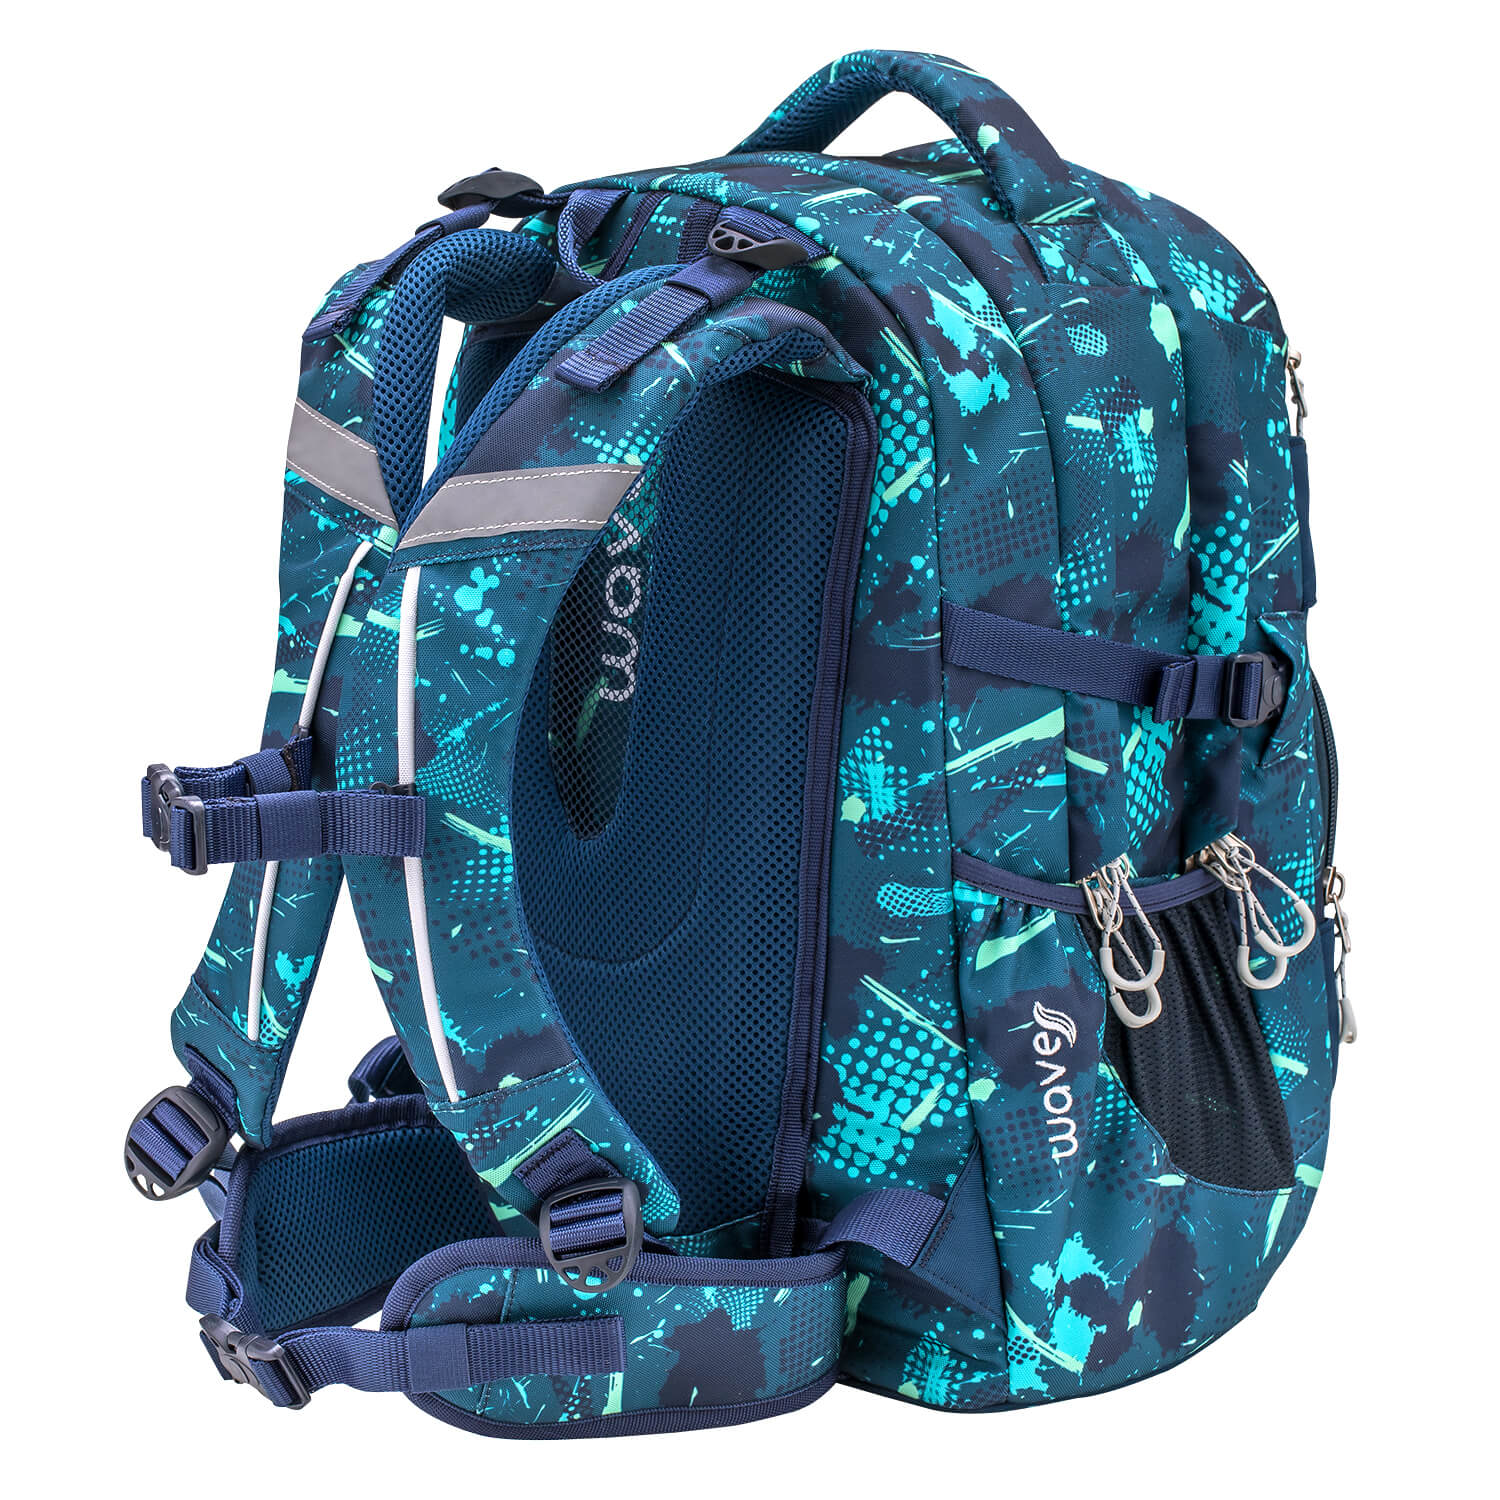 Wave Infinity Fantasy school backpack